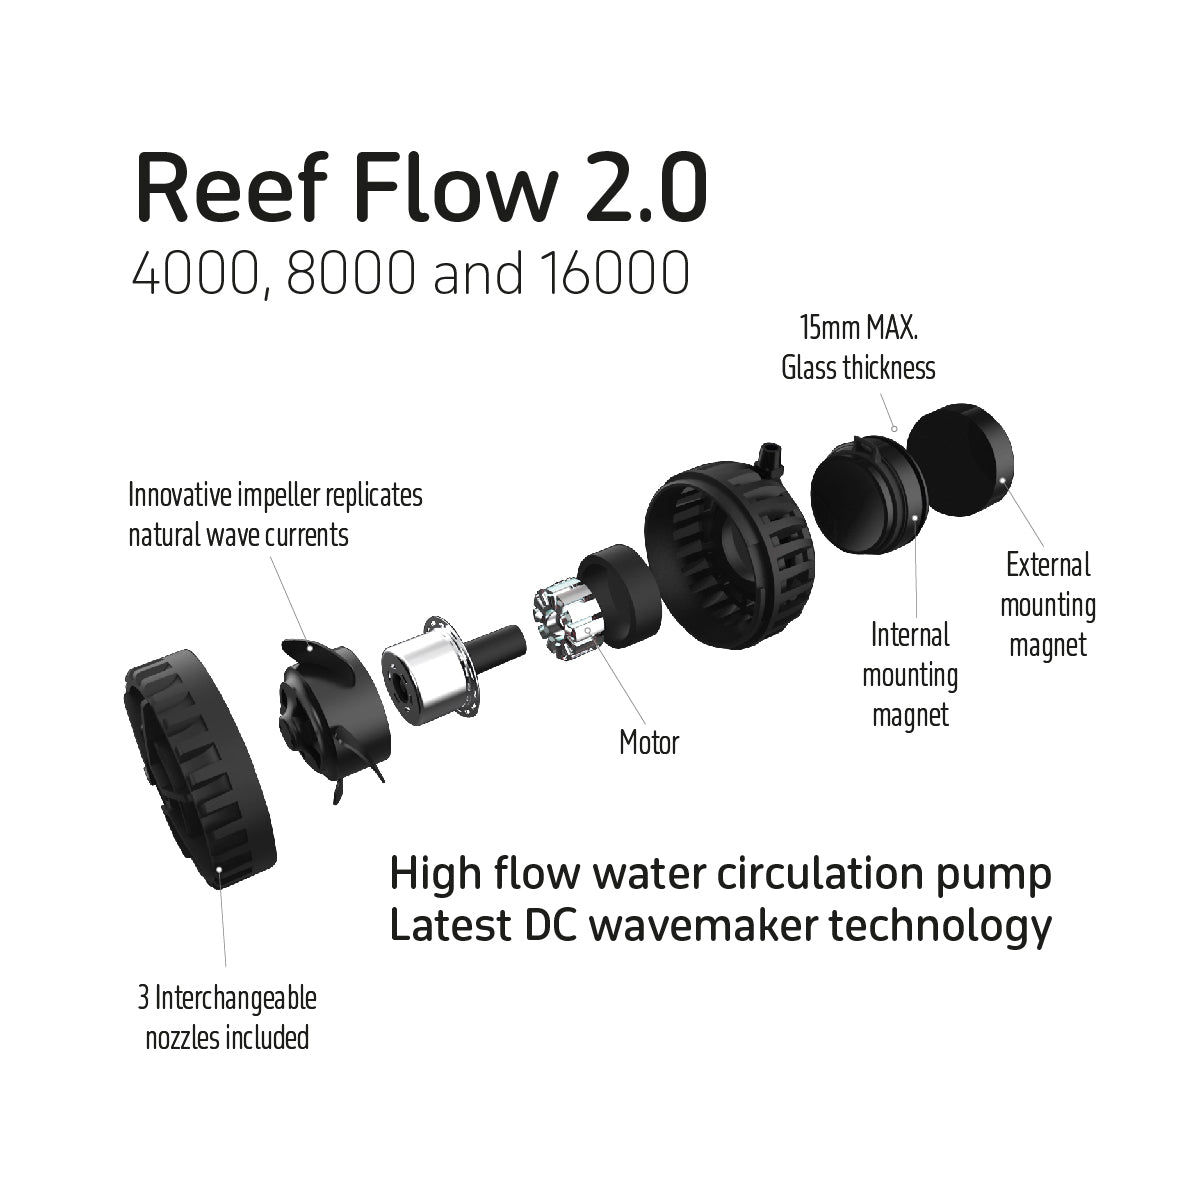 TMC Reef Flow 2.0 16000 DC Wavemaker - Charterhouse Aquatics